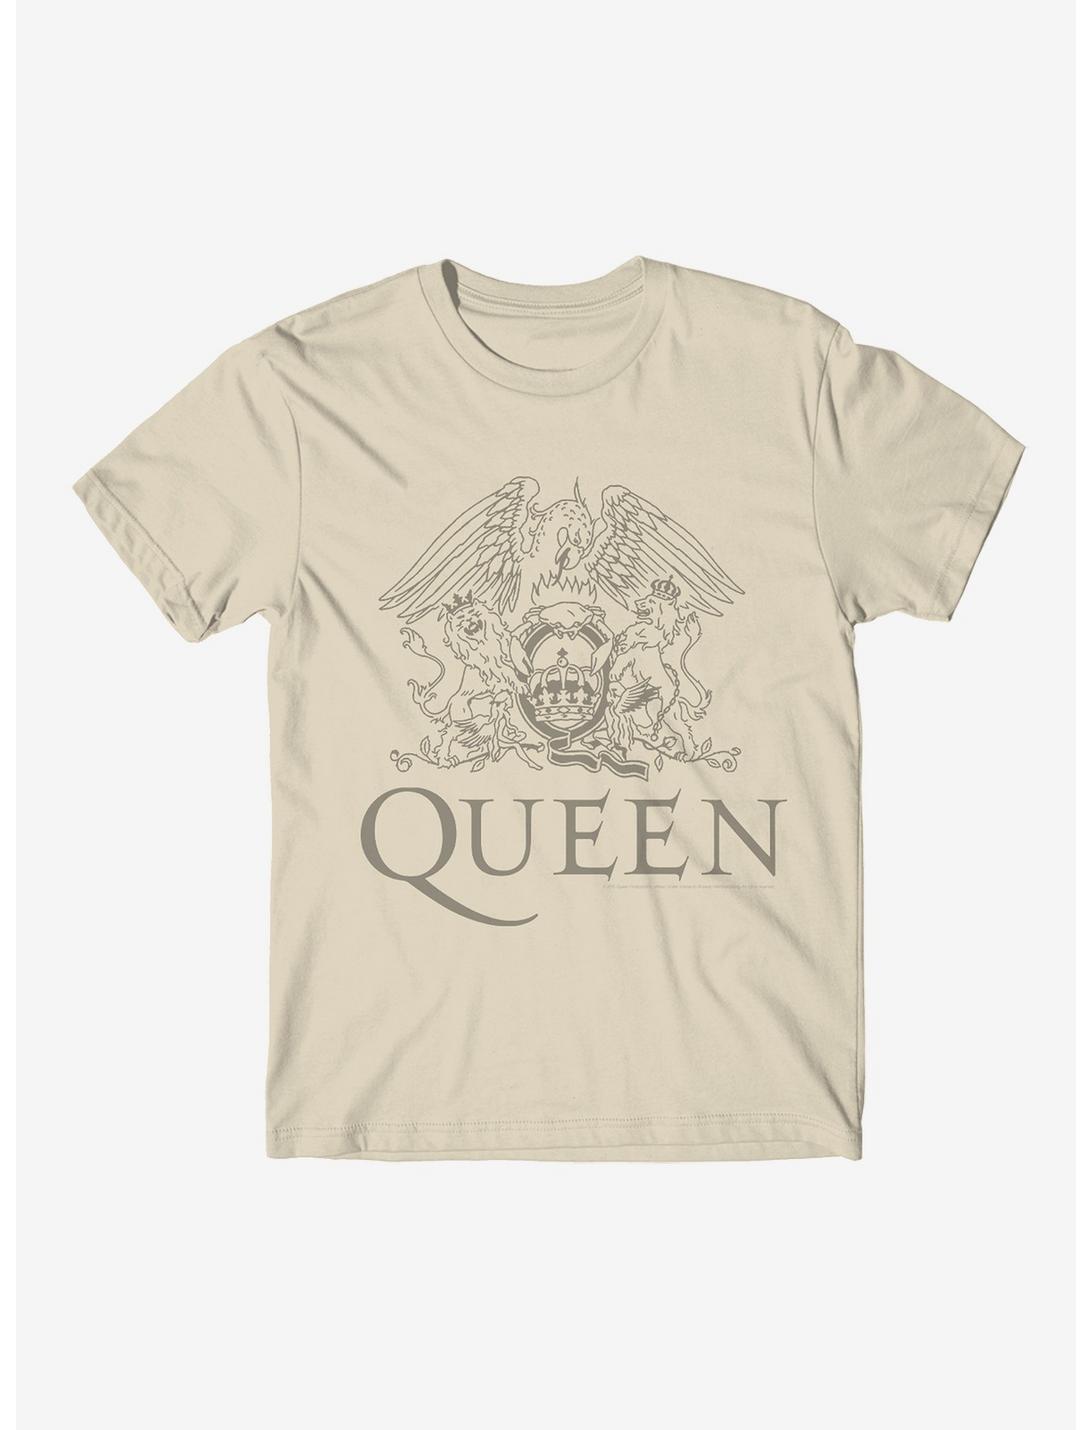 Queen Logo Boyfriend Fit Girls T-Shirt, SAND, hi-res